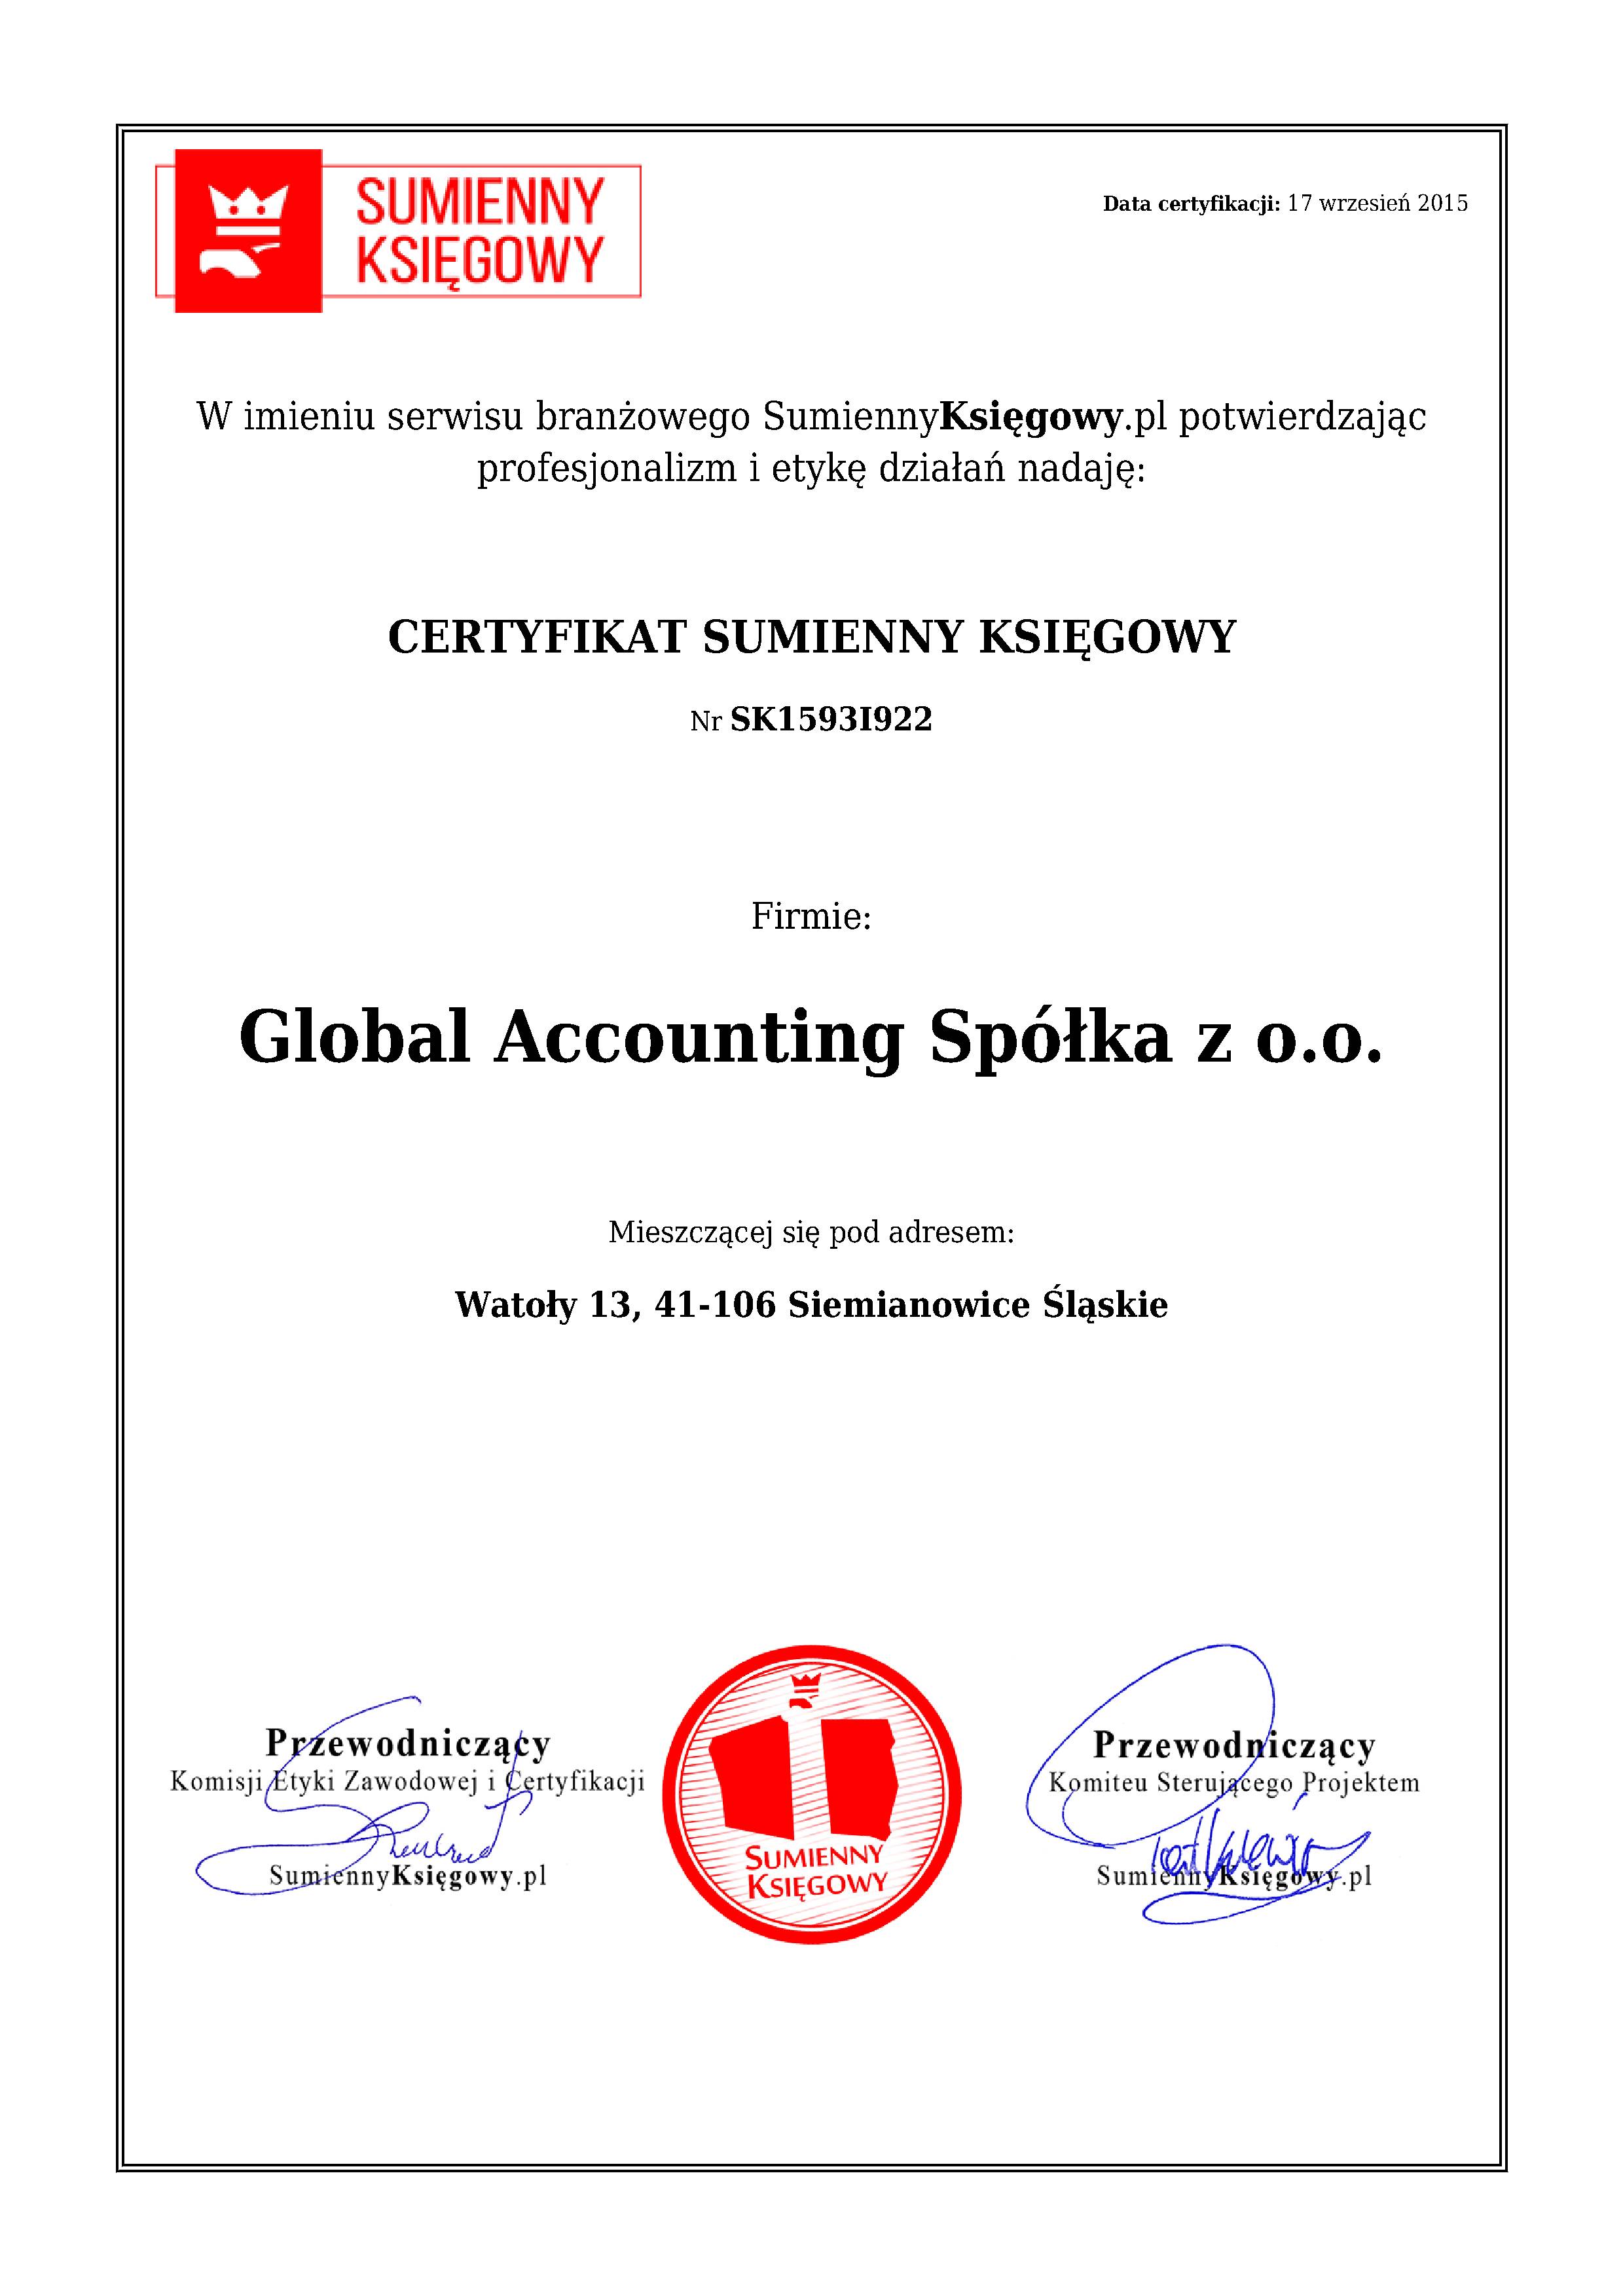 Global Accounting Spółka z o.o. certyfikat 1